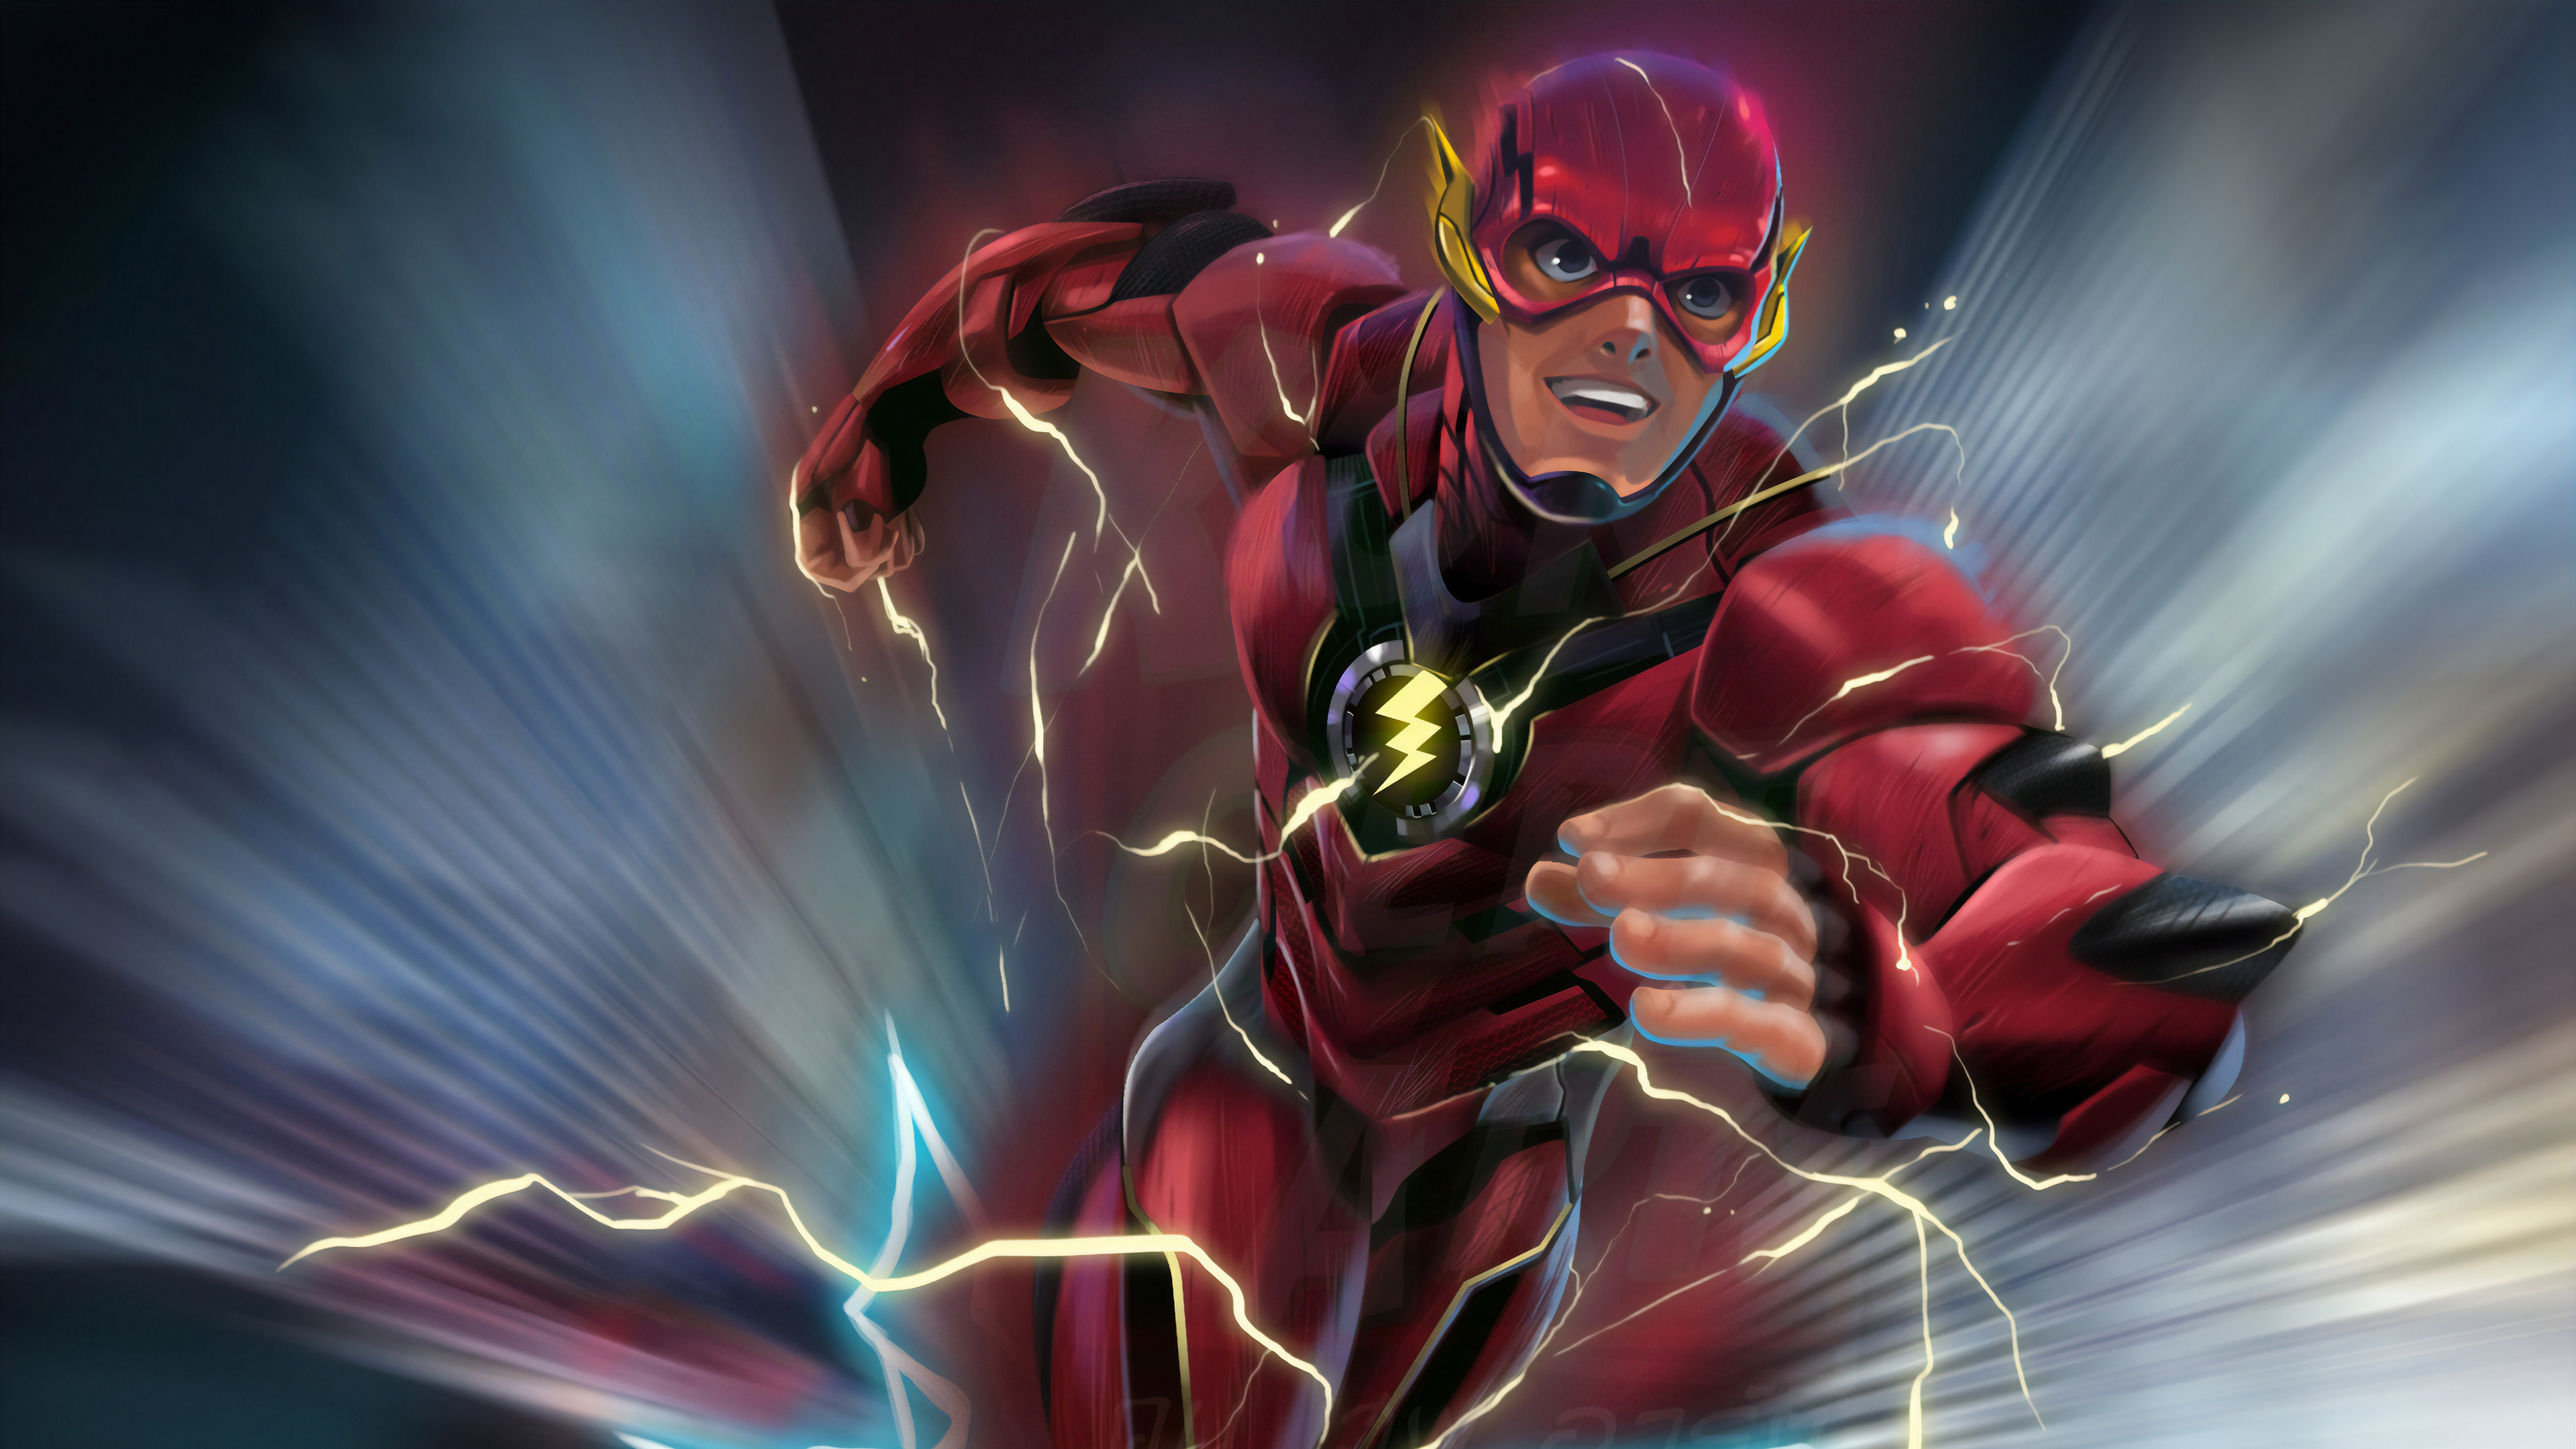 Descarga gratuita de fondo de pantalla para móvil de Historietas, Dc Comics, The Flash, Barry Allen.